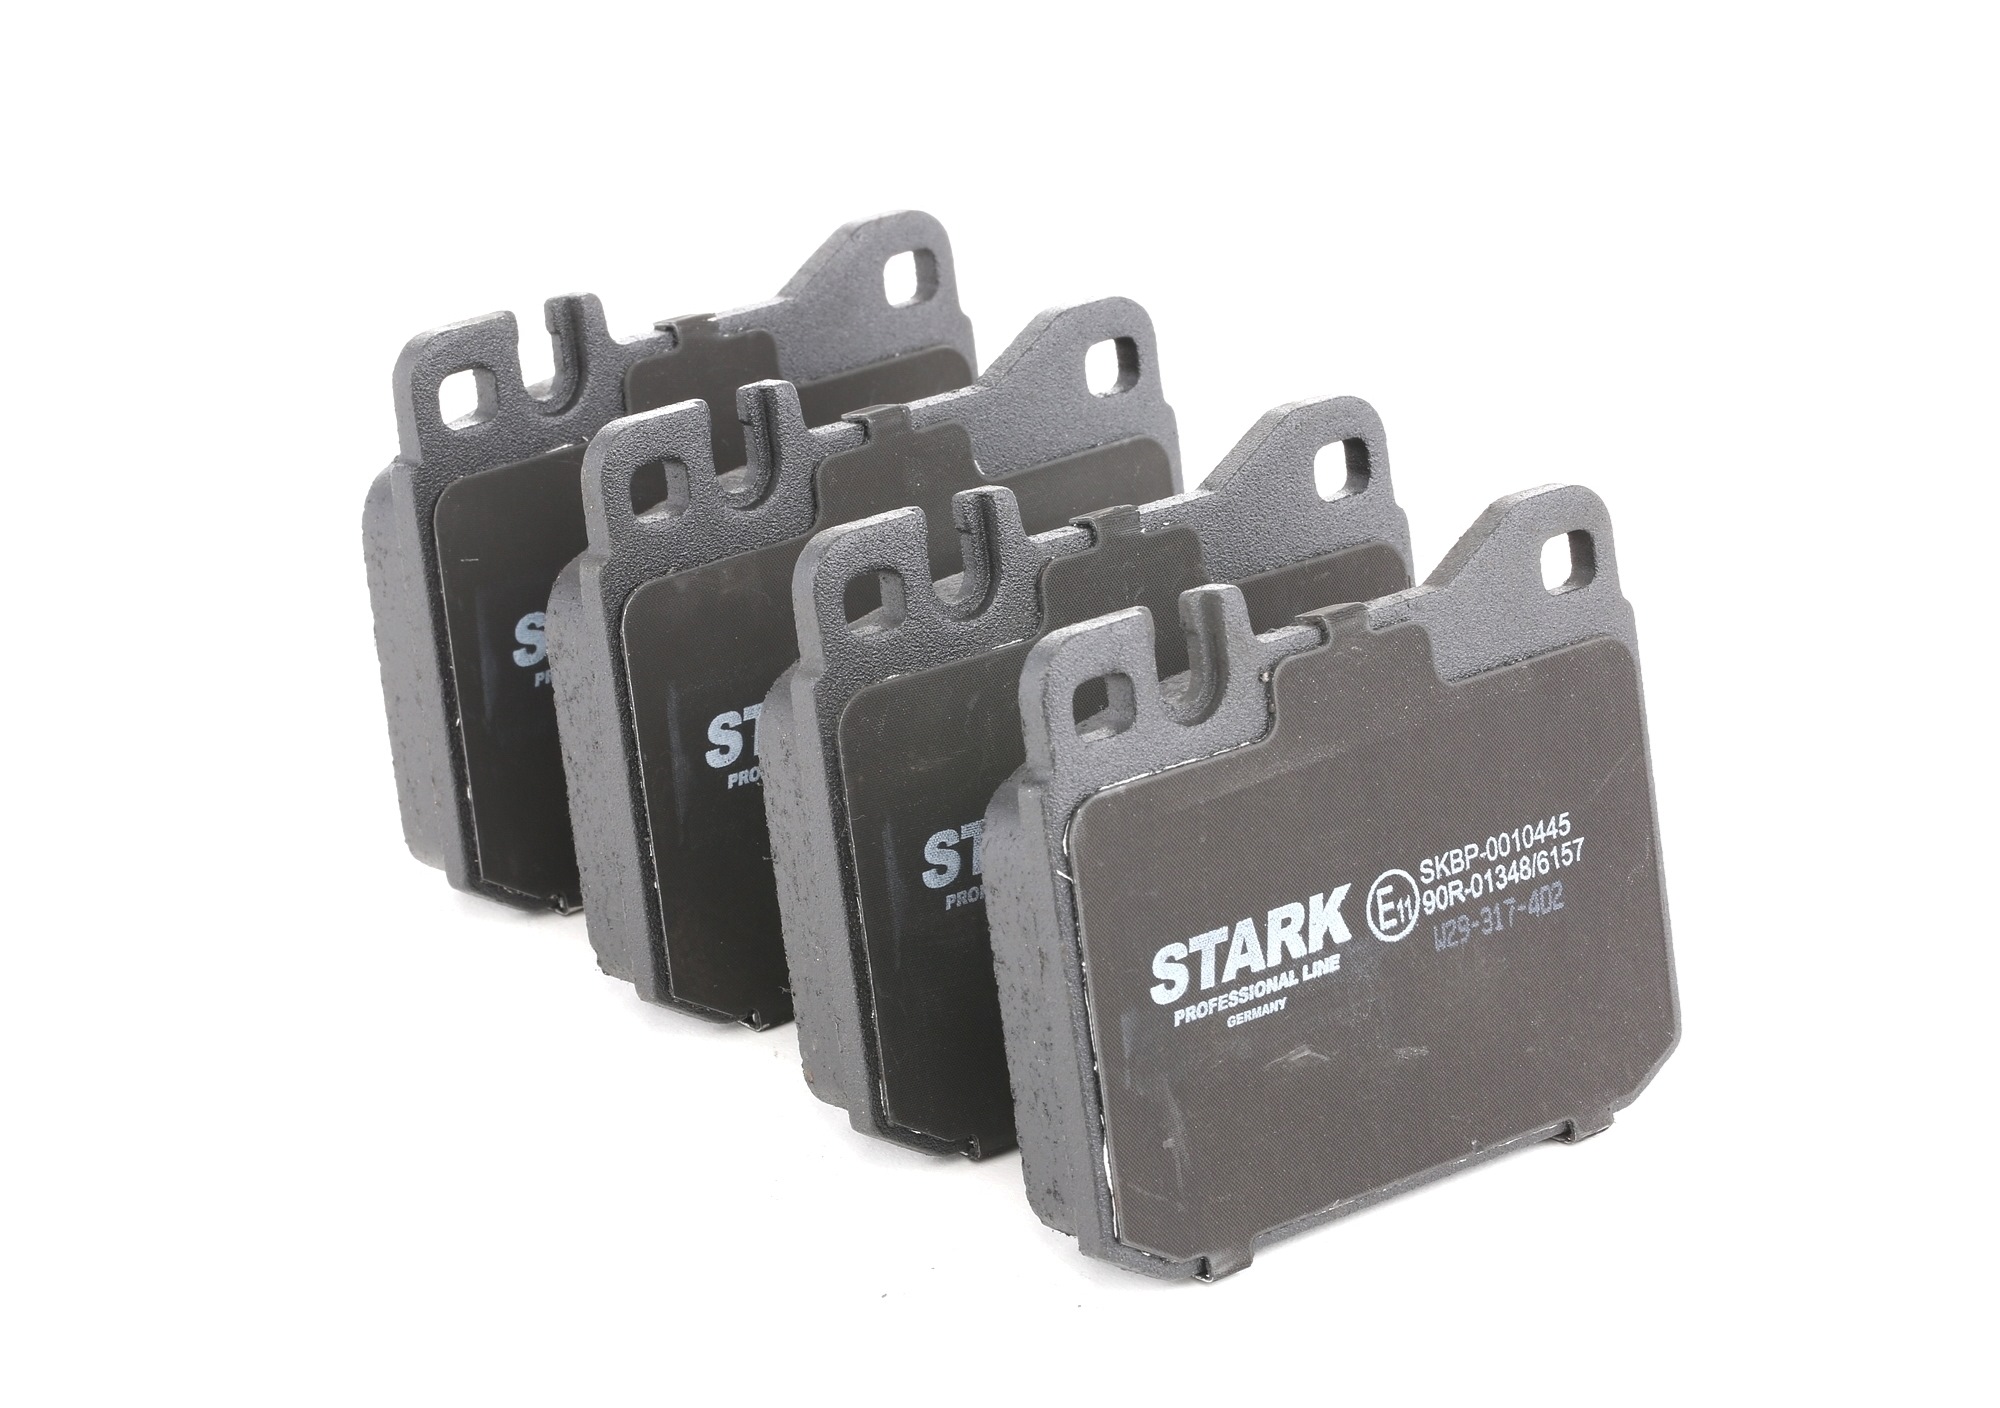 STARK Bremsbelagsatz SKBP-0010445